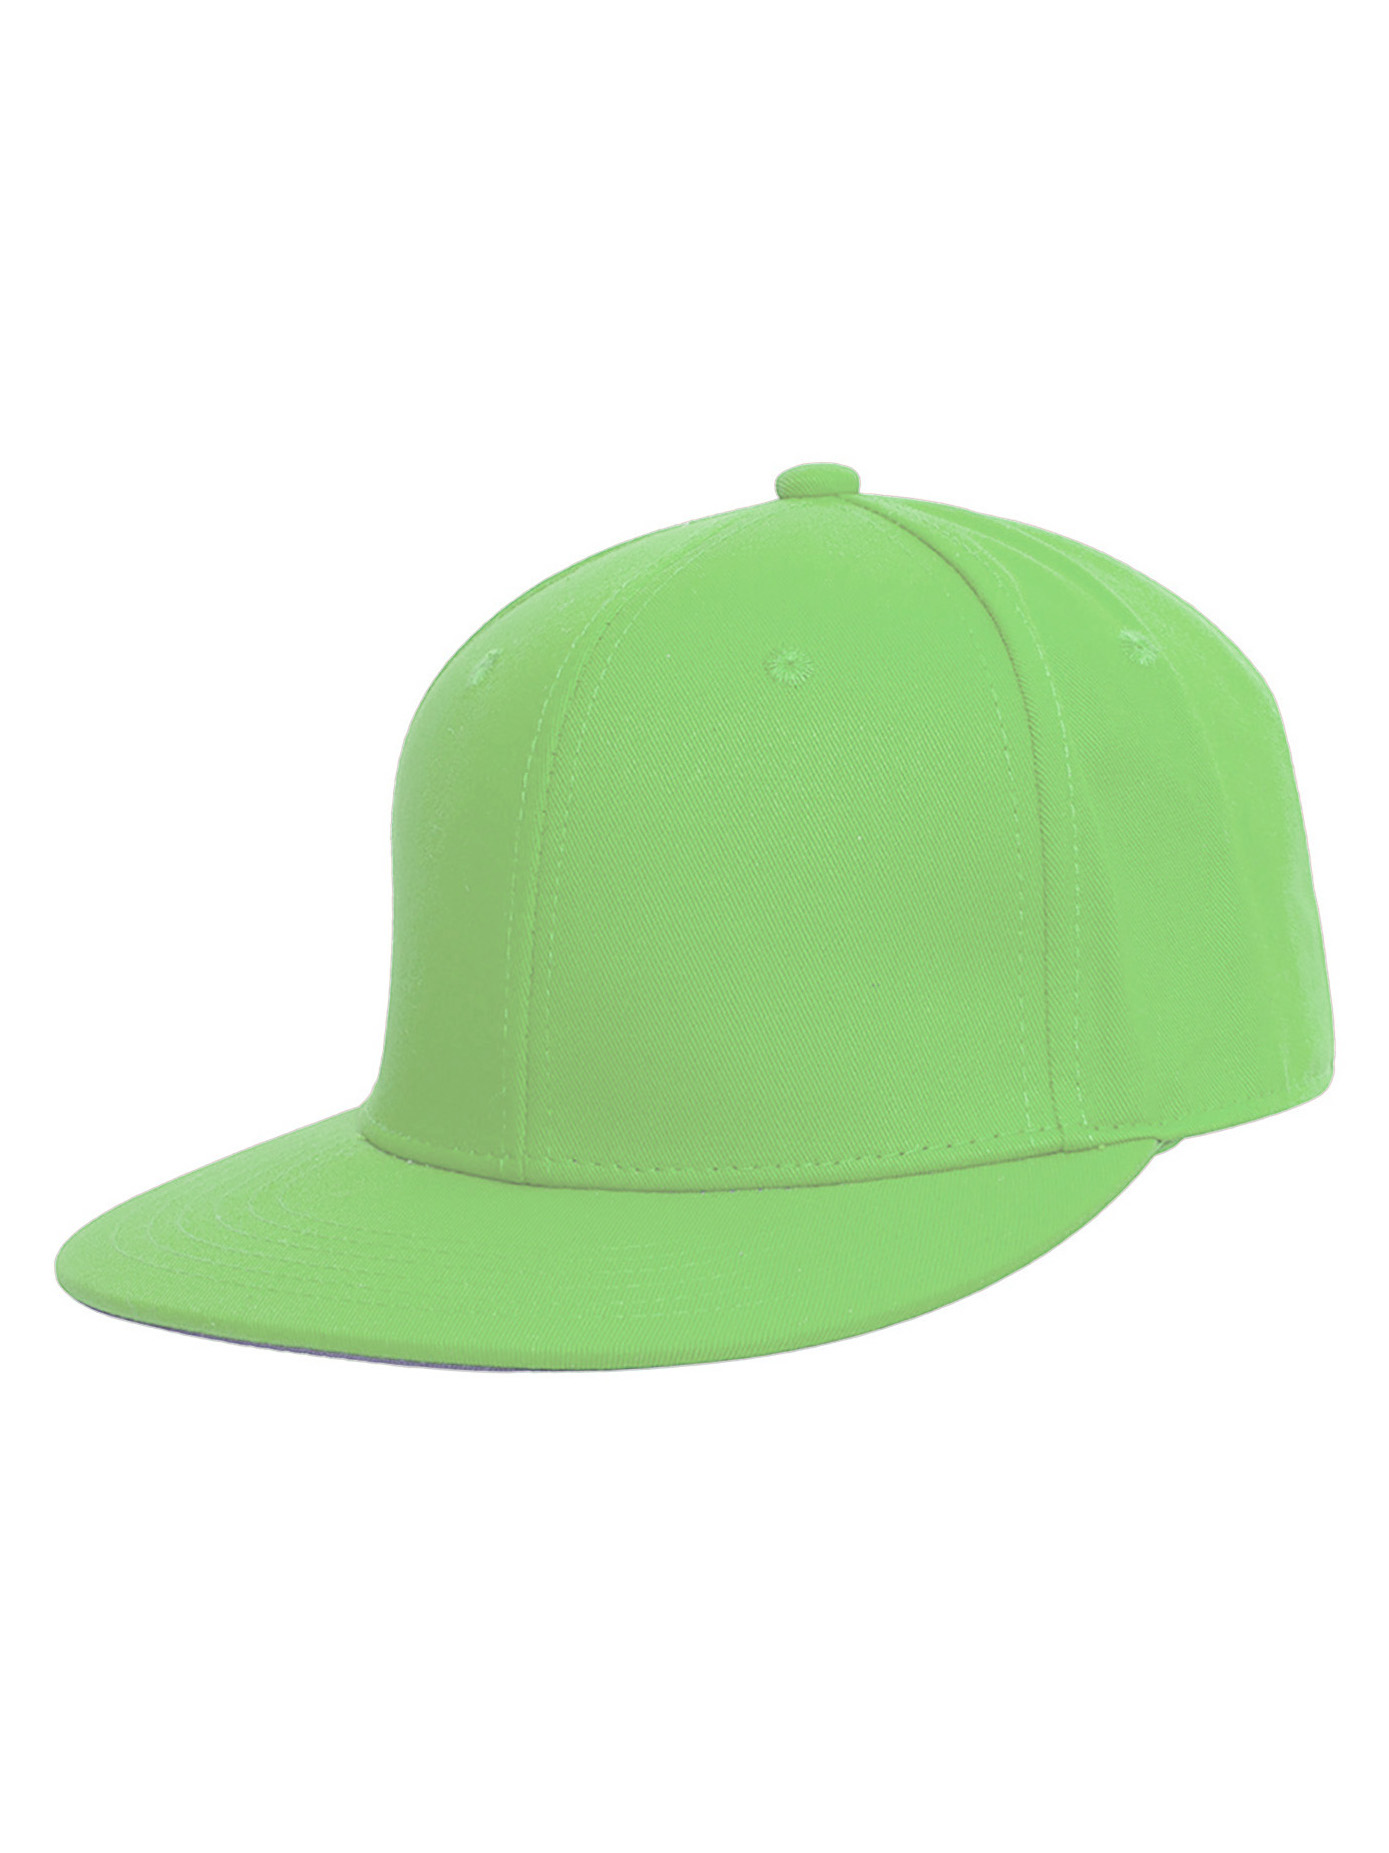 Top Headwear Plain Flat Bill Fitted Hat, Neon Green 7 3/8 - image 1 of 4